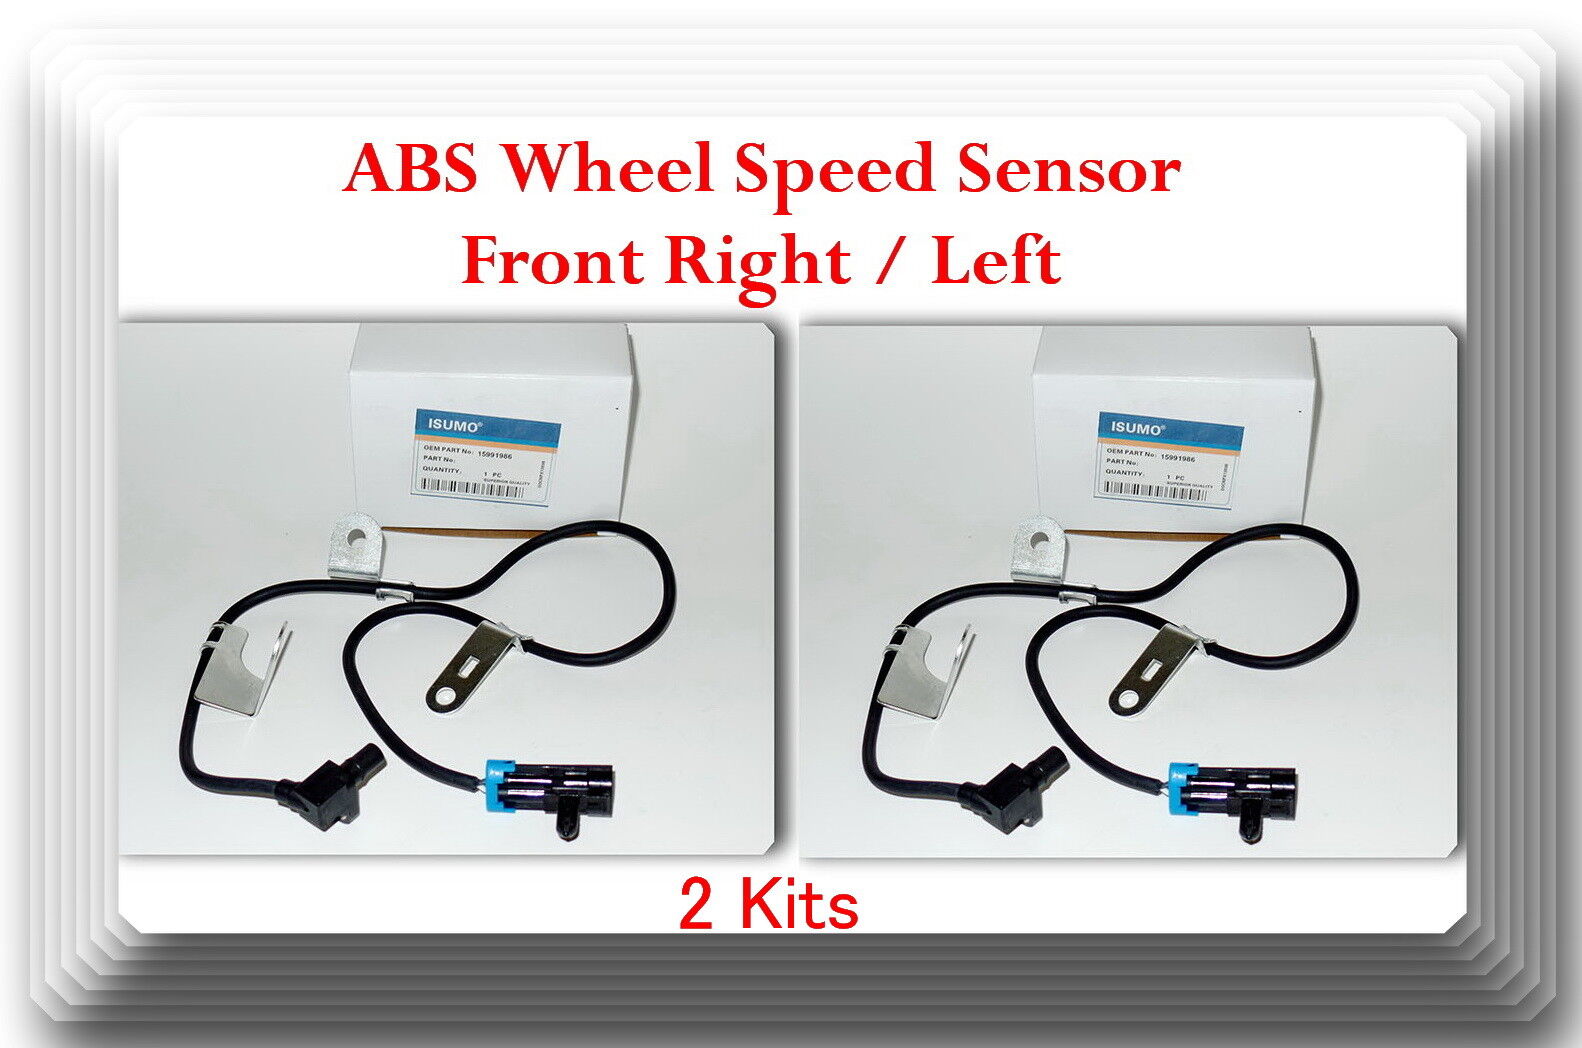 Set 2 ABS Wheel Speed Sensor Front-Right & Left Fits: Chevrolet GMC Trucks & SUV